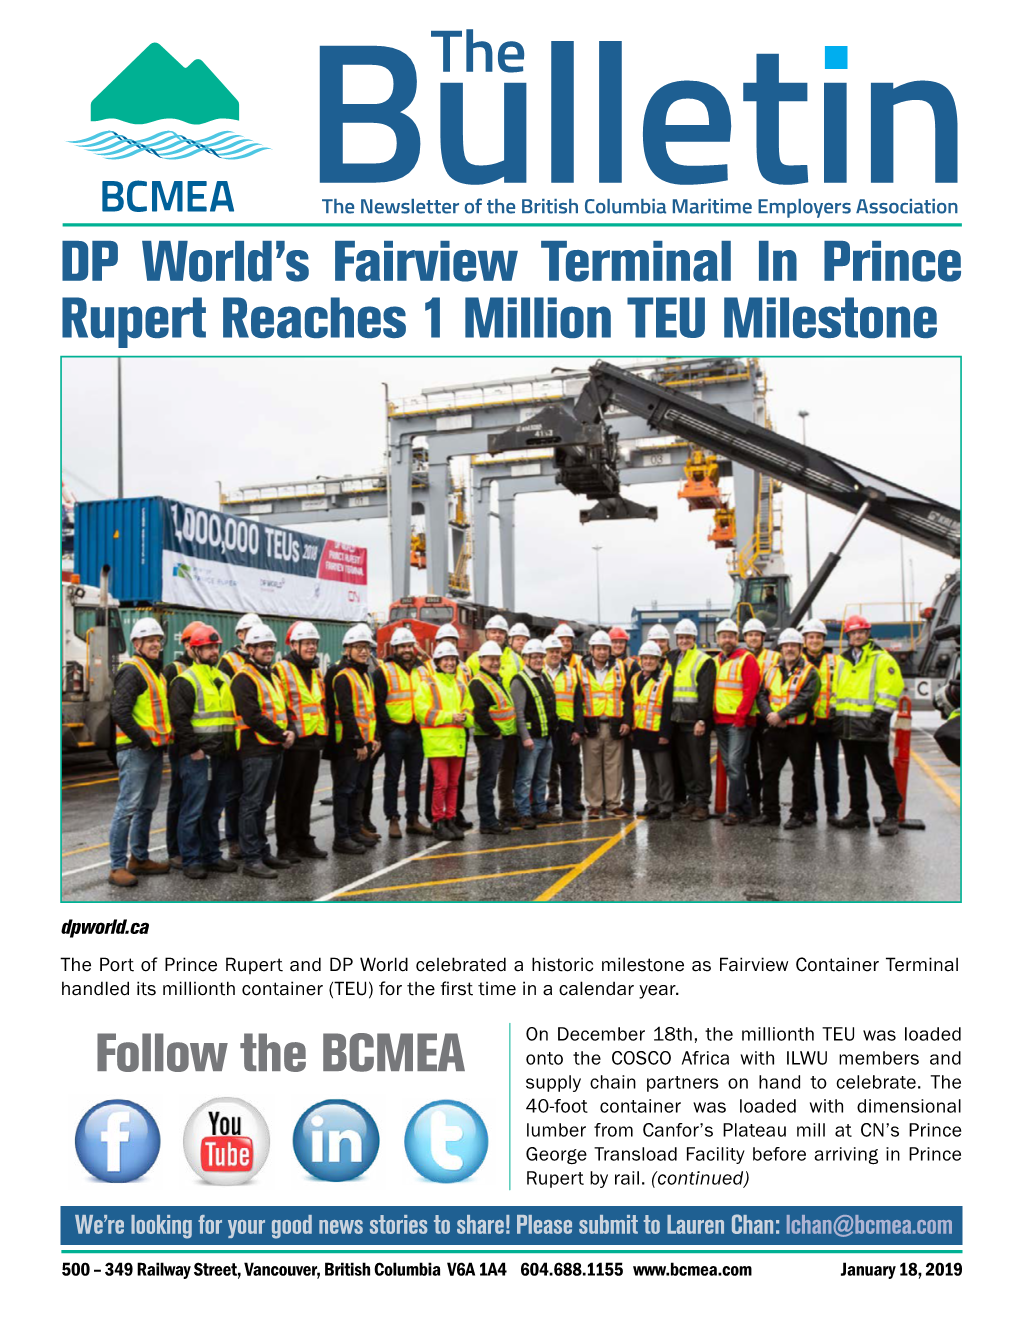 DP World's Fairview Terminal in Prince Rupert Reaches 1 Million TEU Milestone